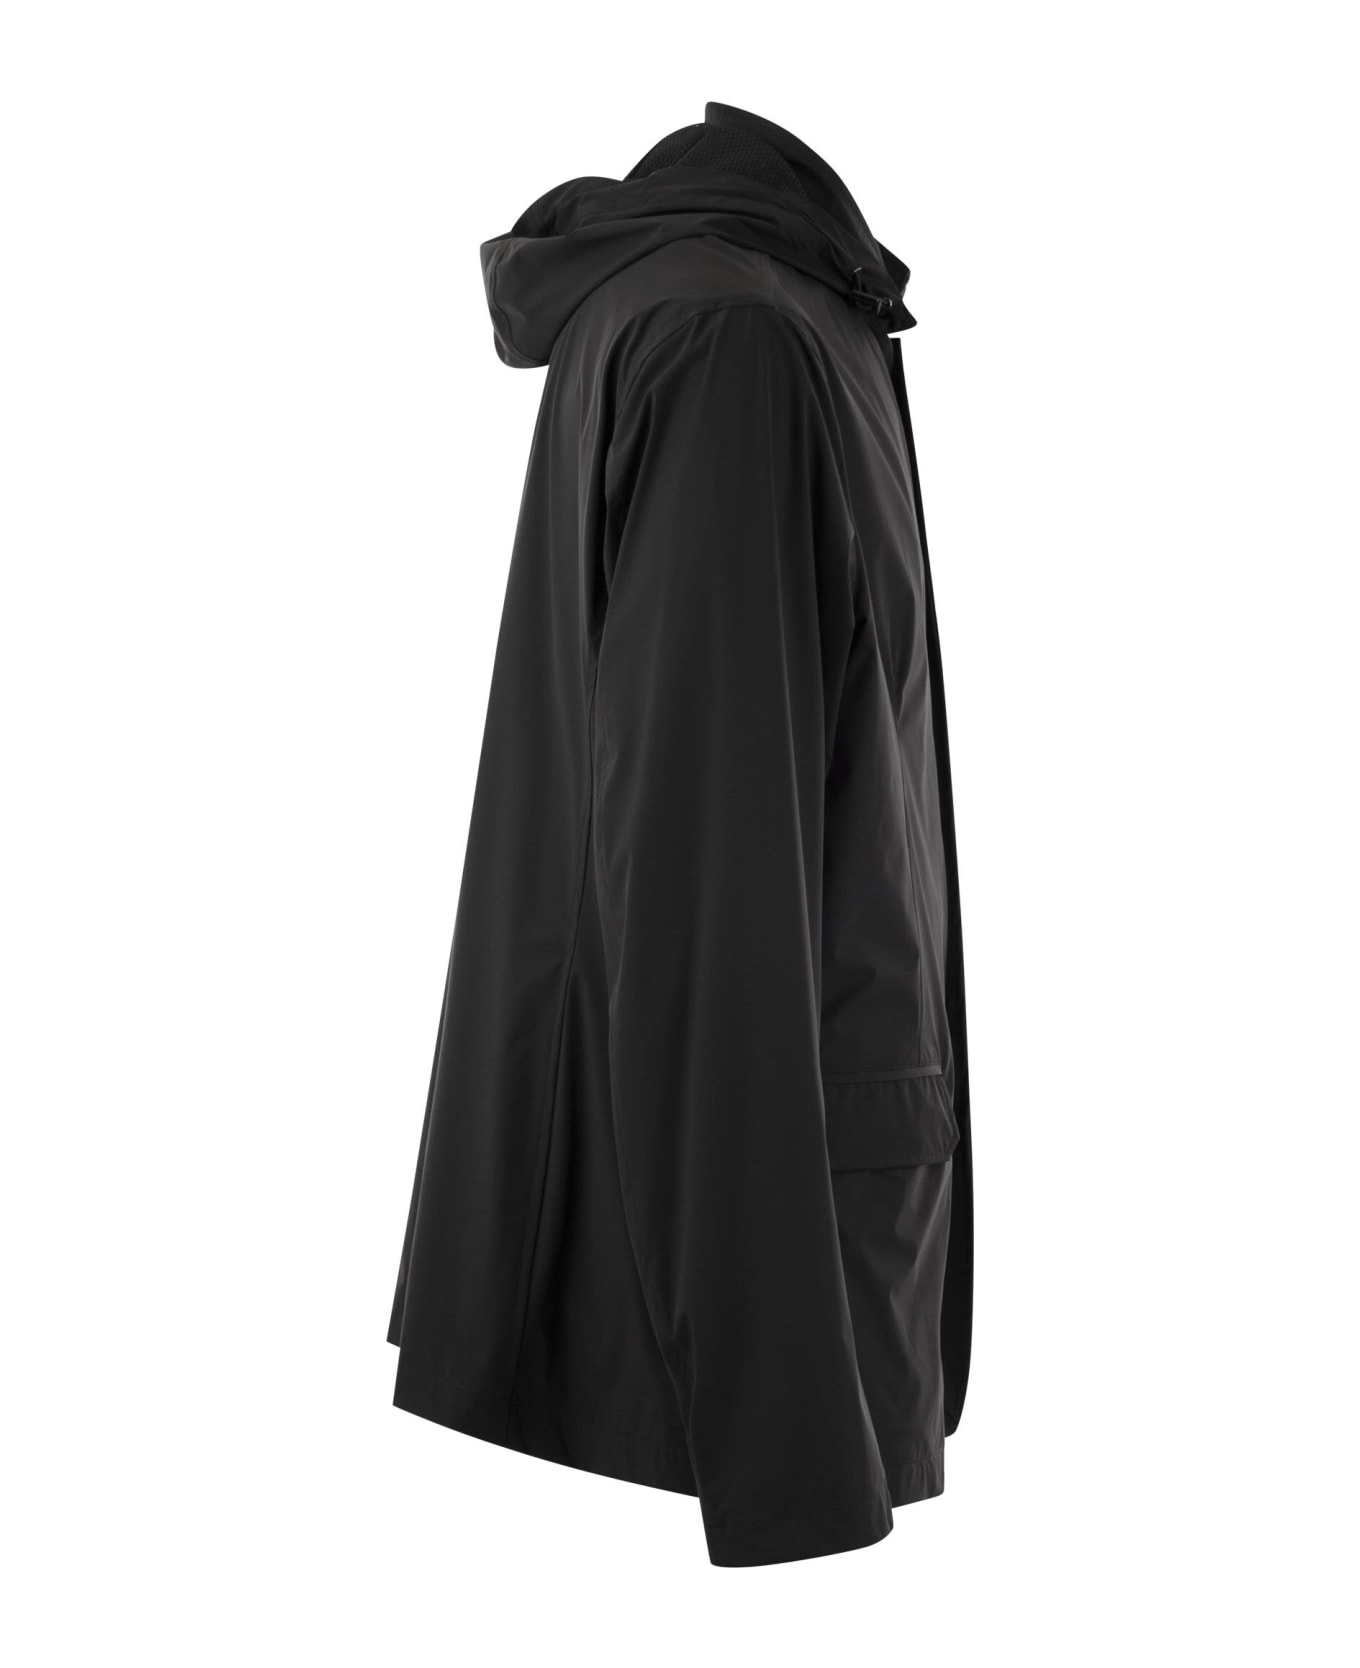 Herno Technical Fabric Jacket With Hood - Black ジャケット